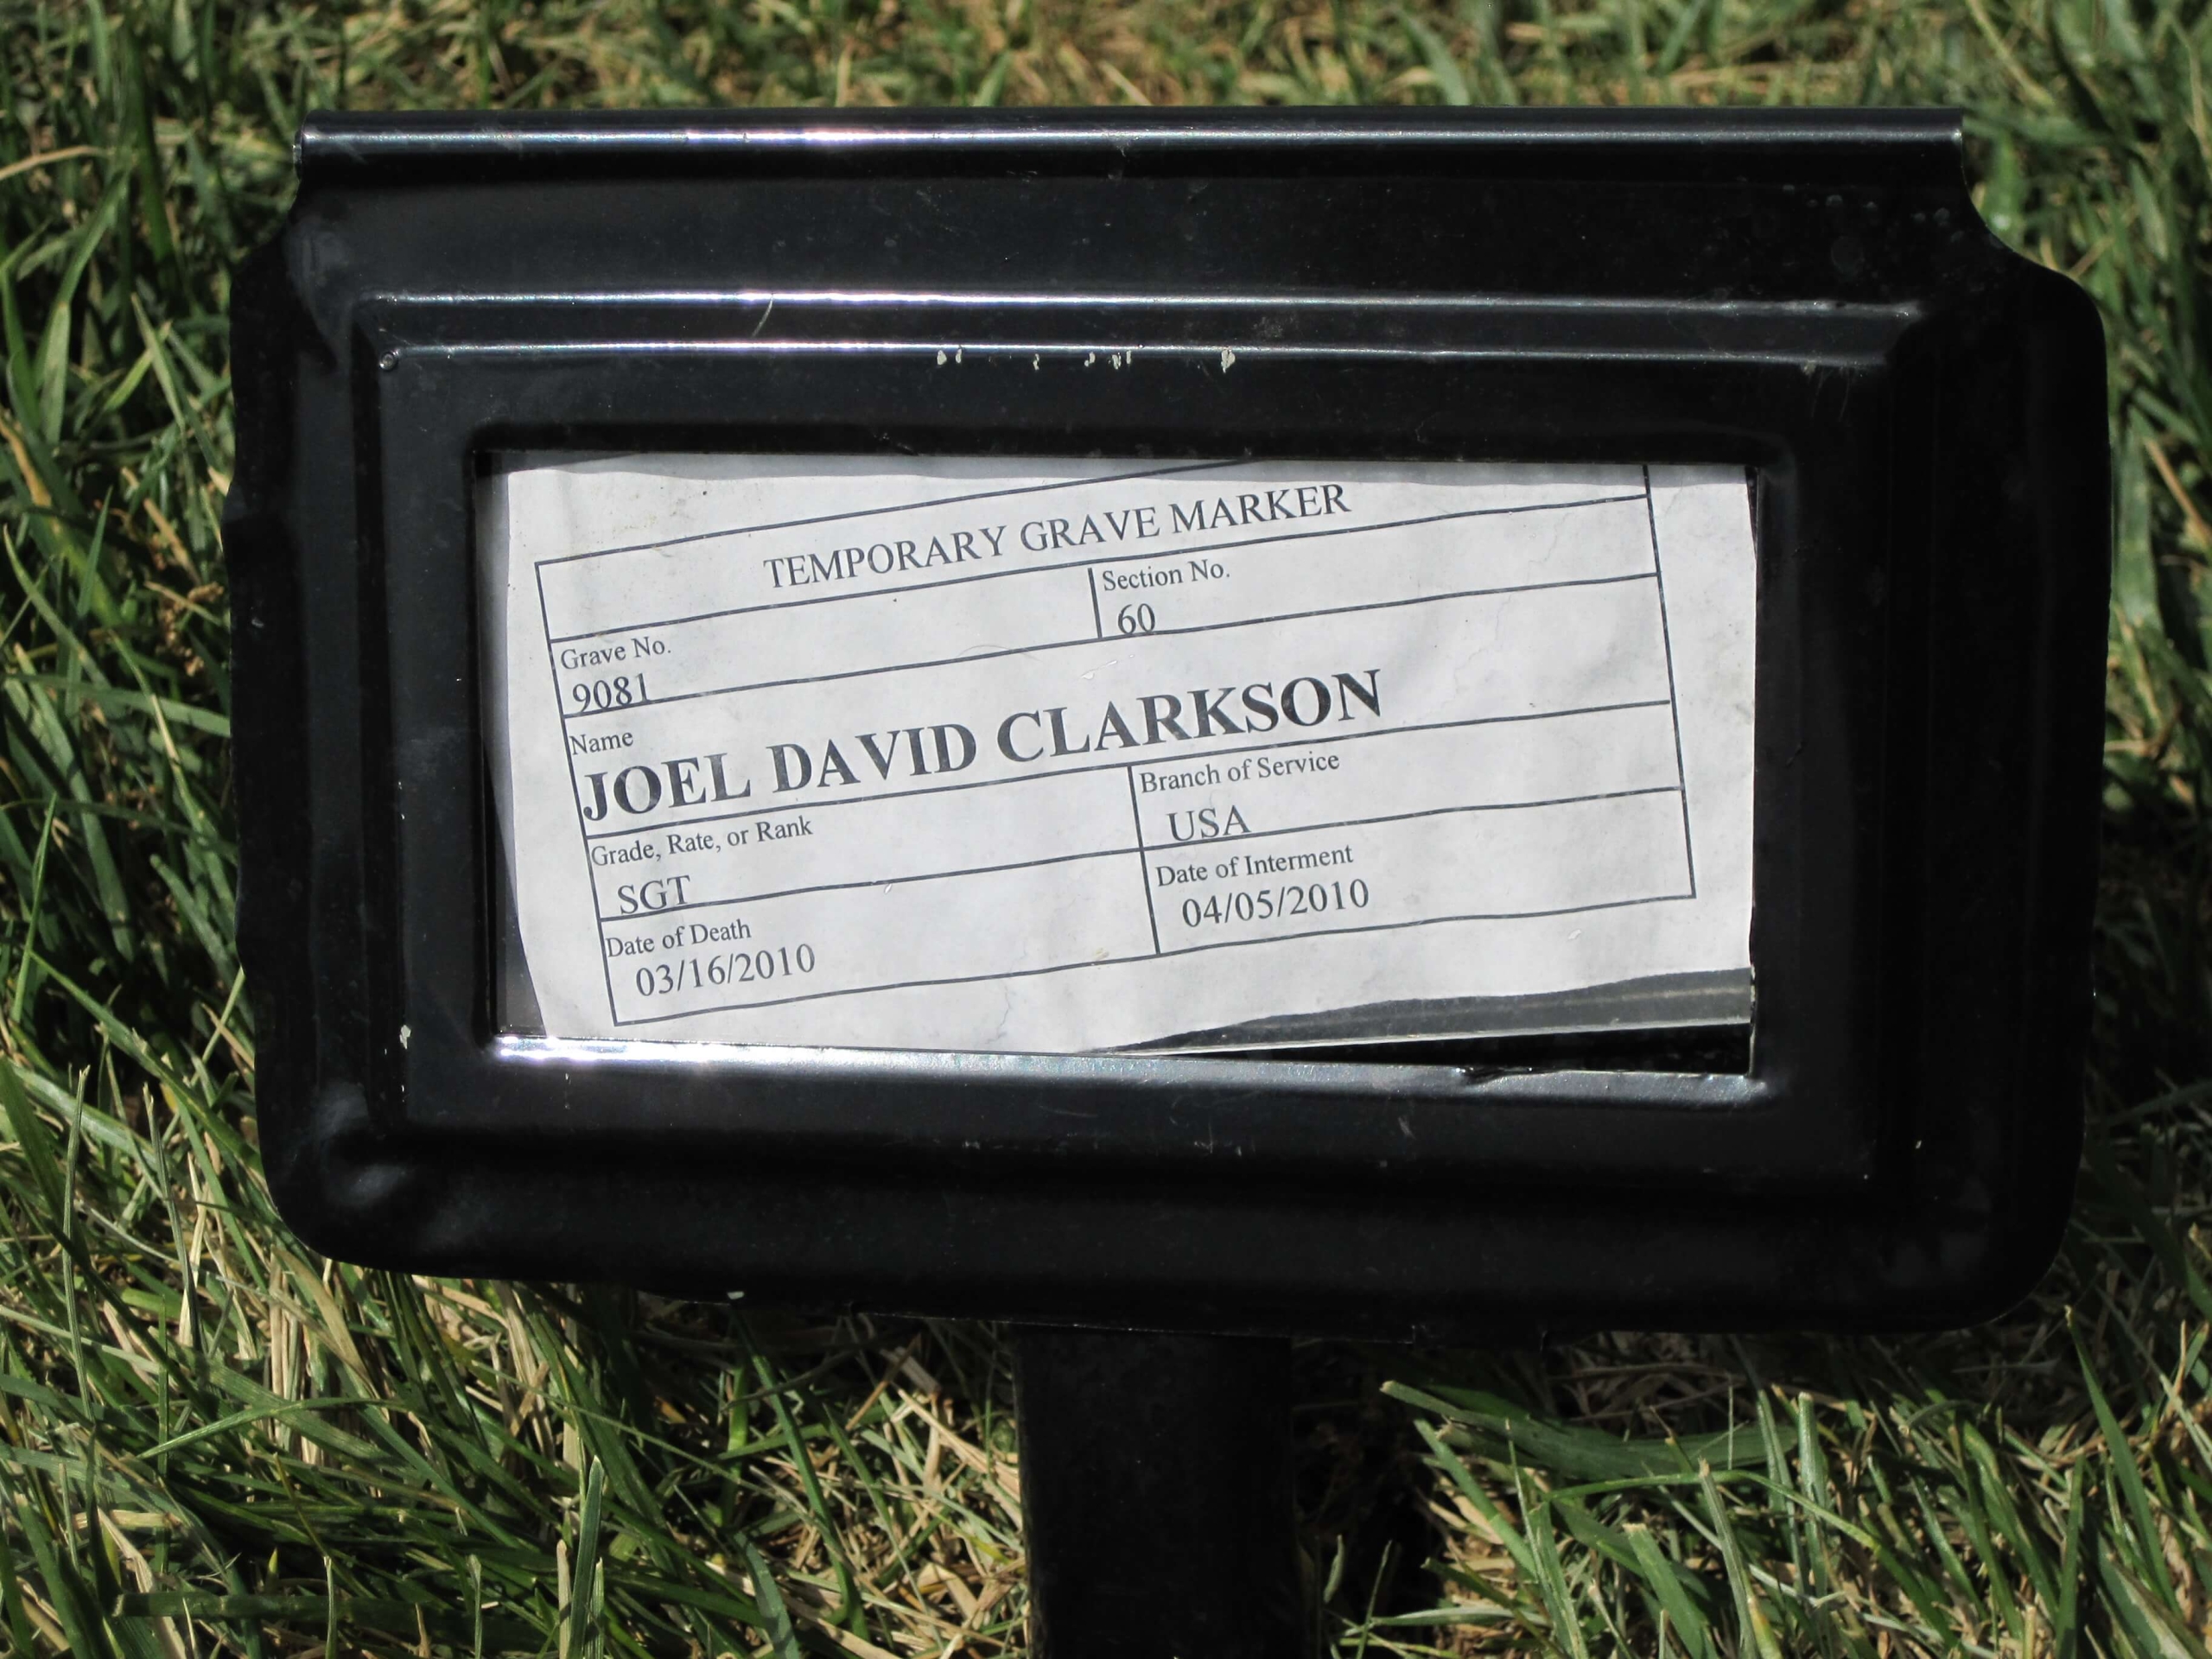 jdclarkson-gravesite-photo-by-eileen-horan-april-2010-001